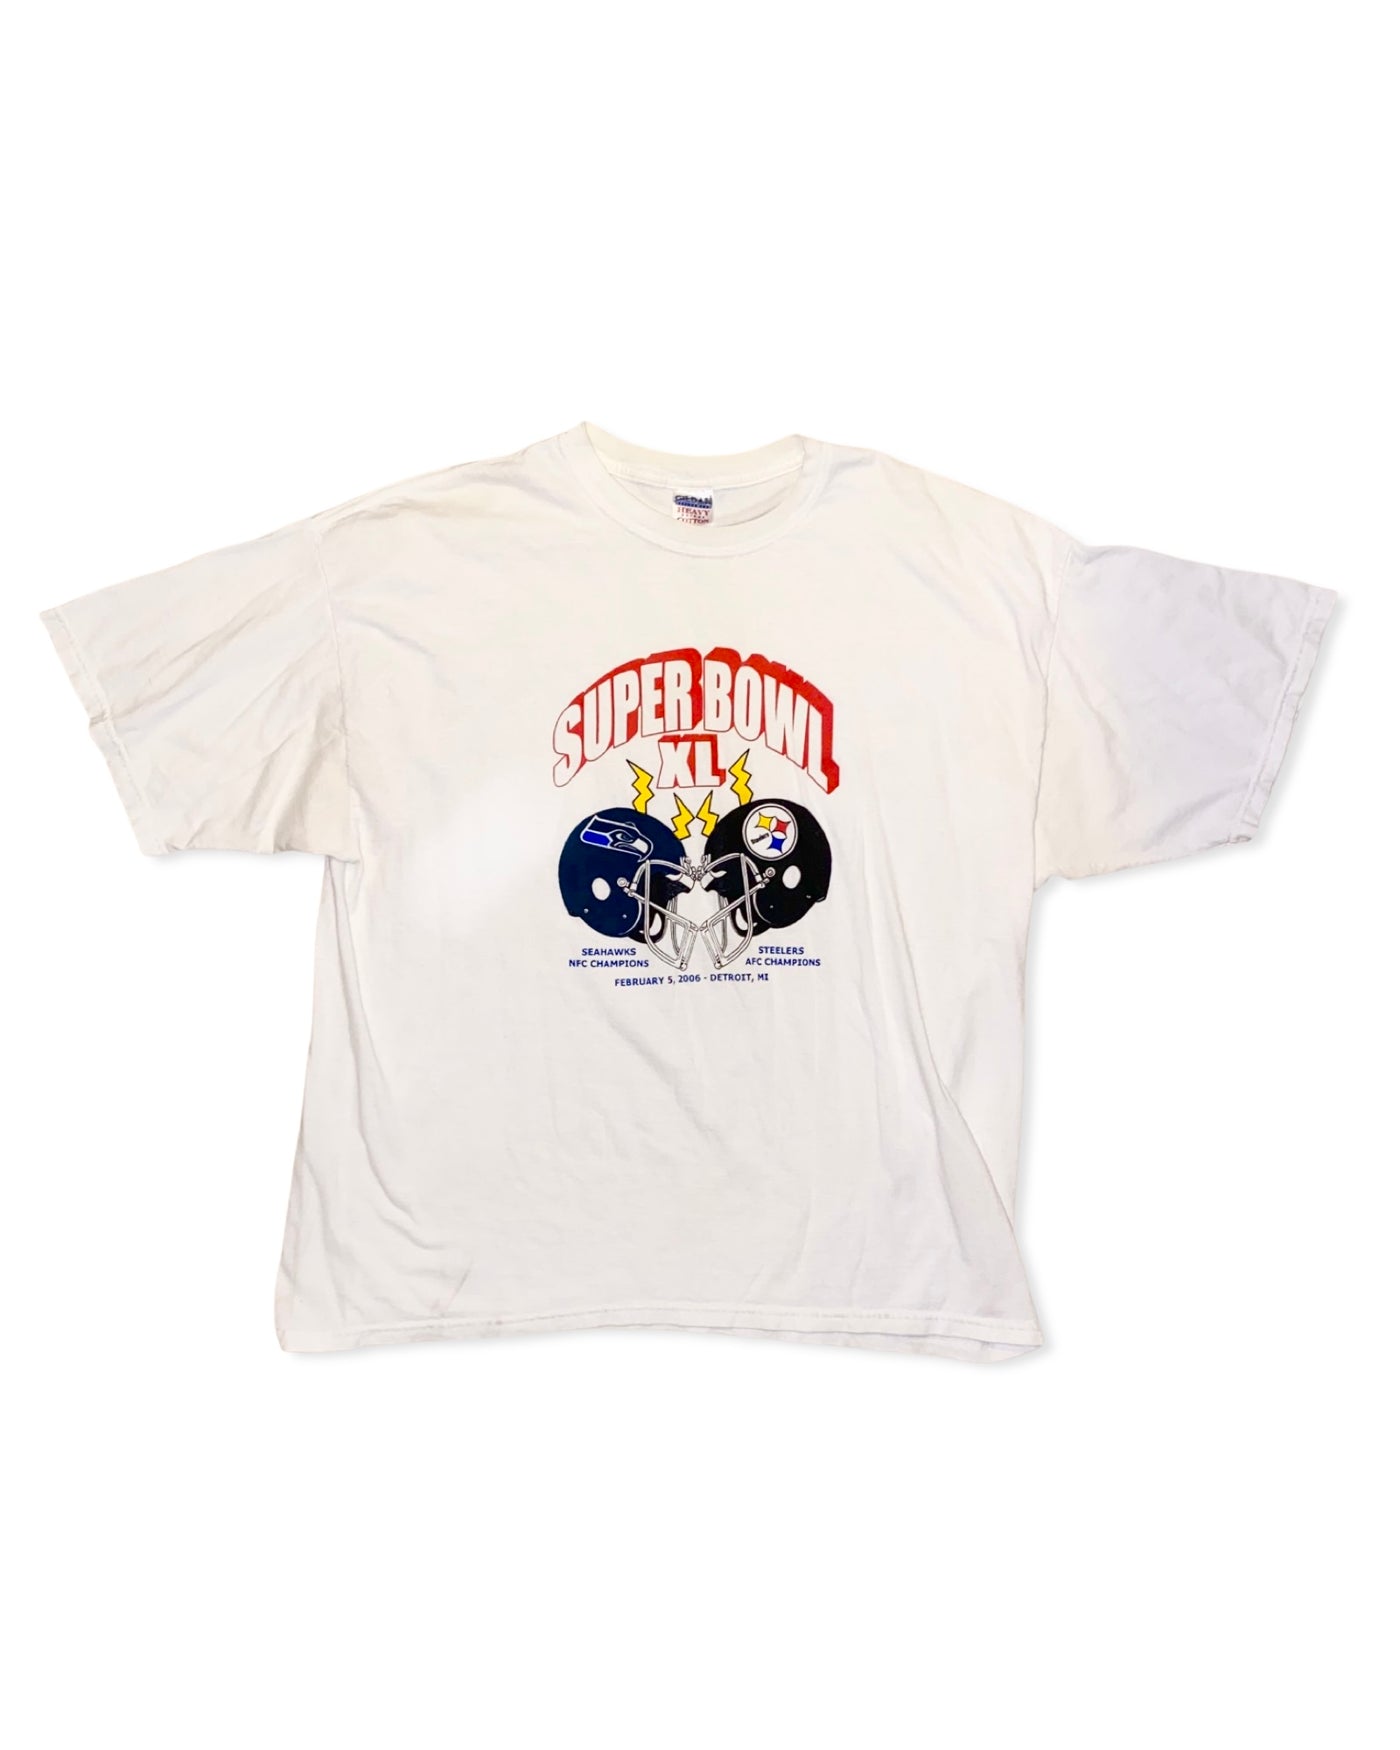 2006 Super Bowl XL Seahawks Steelers T-Shirt